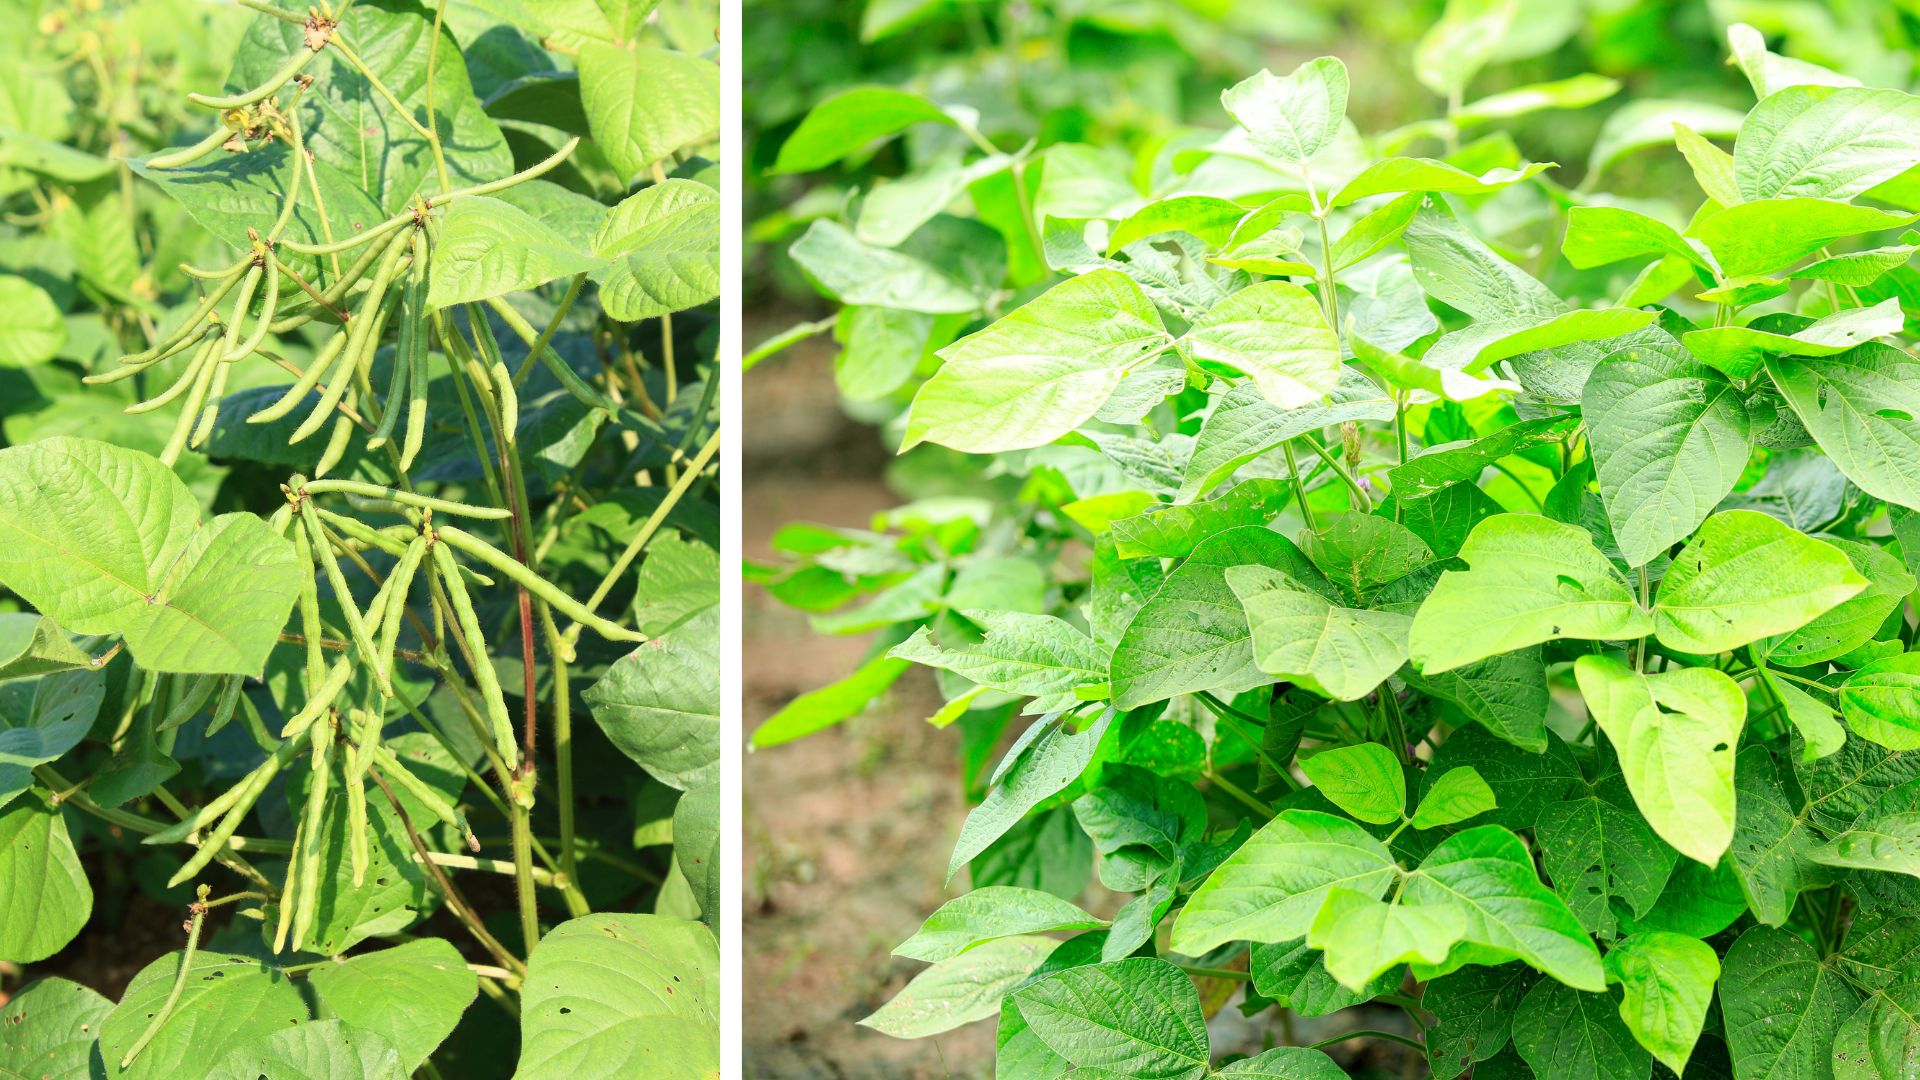 Description of Mung bean plant - Mung bean plant physiology